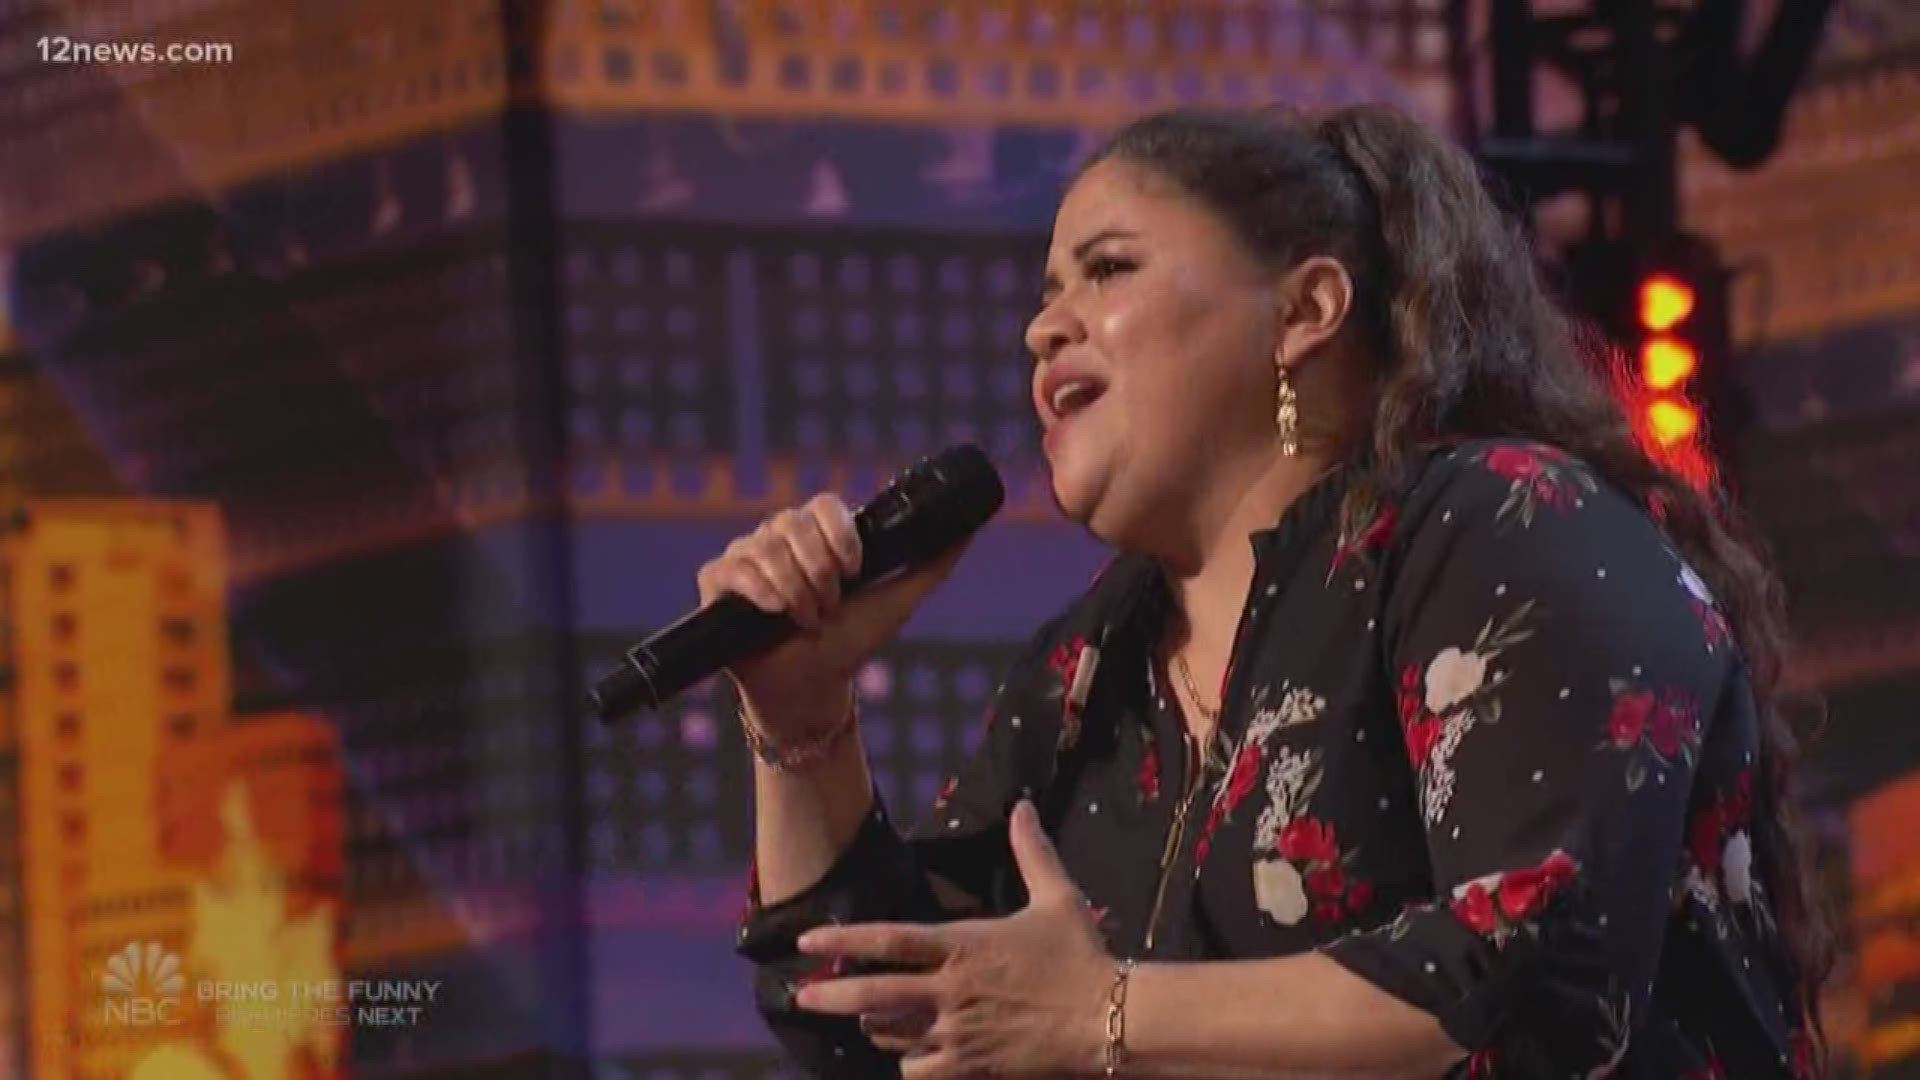 Tempe detention officer sings on America's Got Talent 